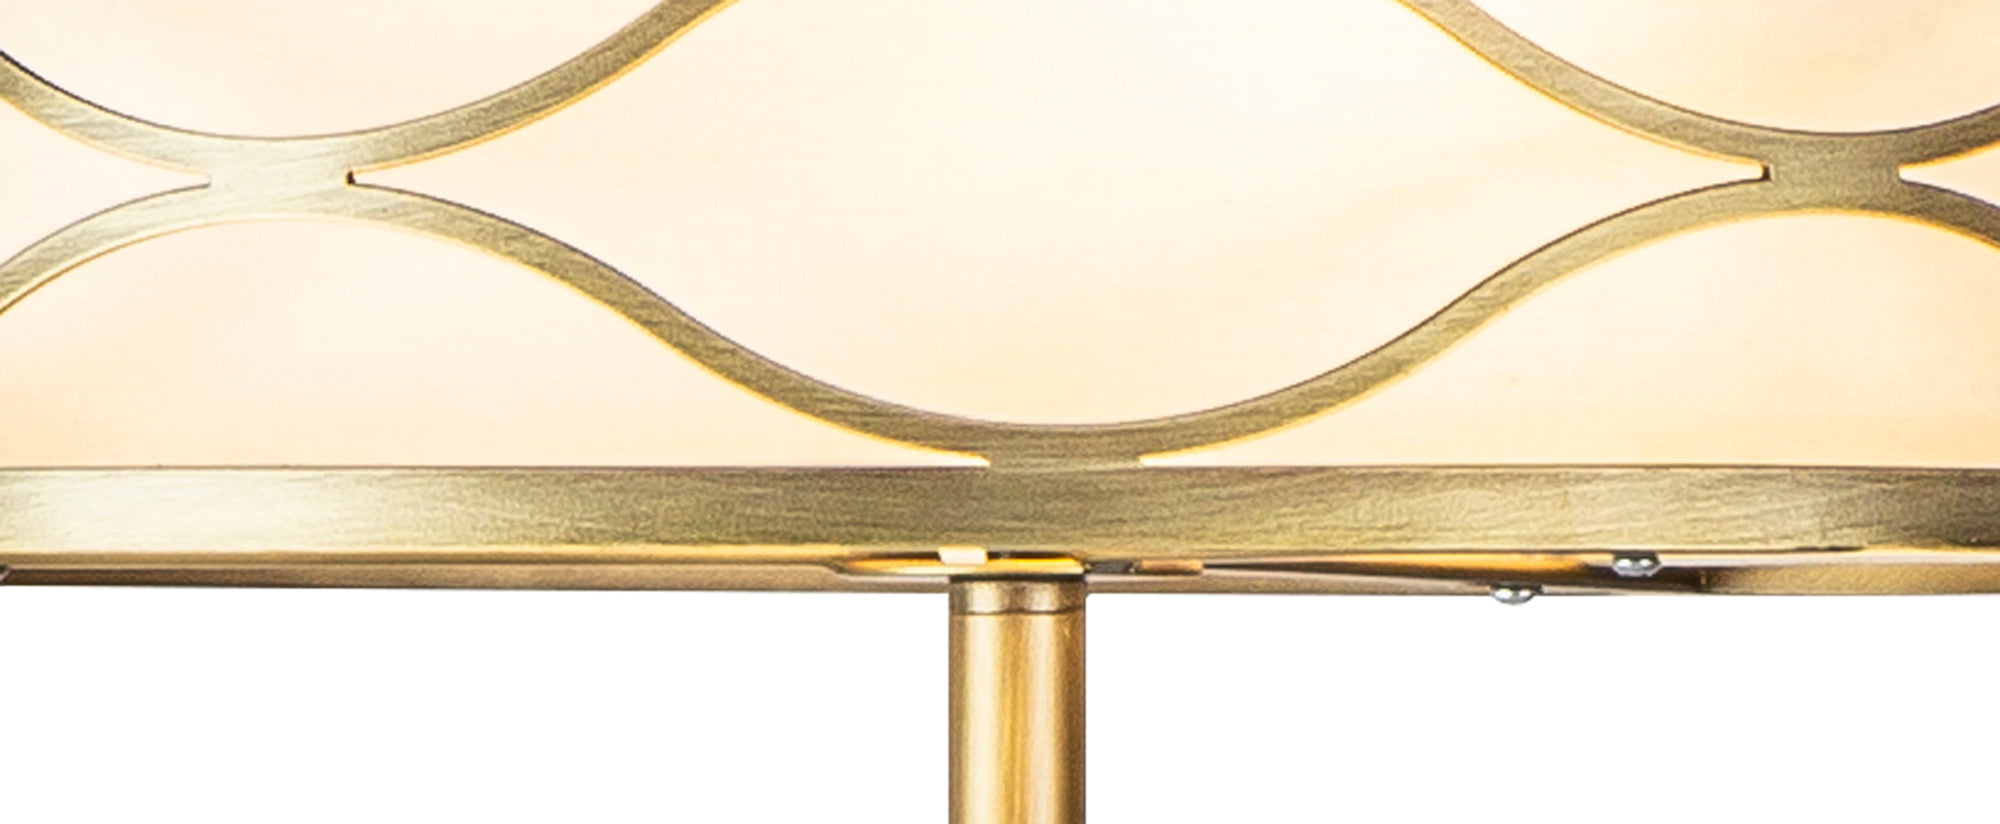 Edgerton Floor Lamp 3 Light E14 Aged Gold  &  Cream Fabric Shade